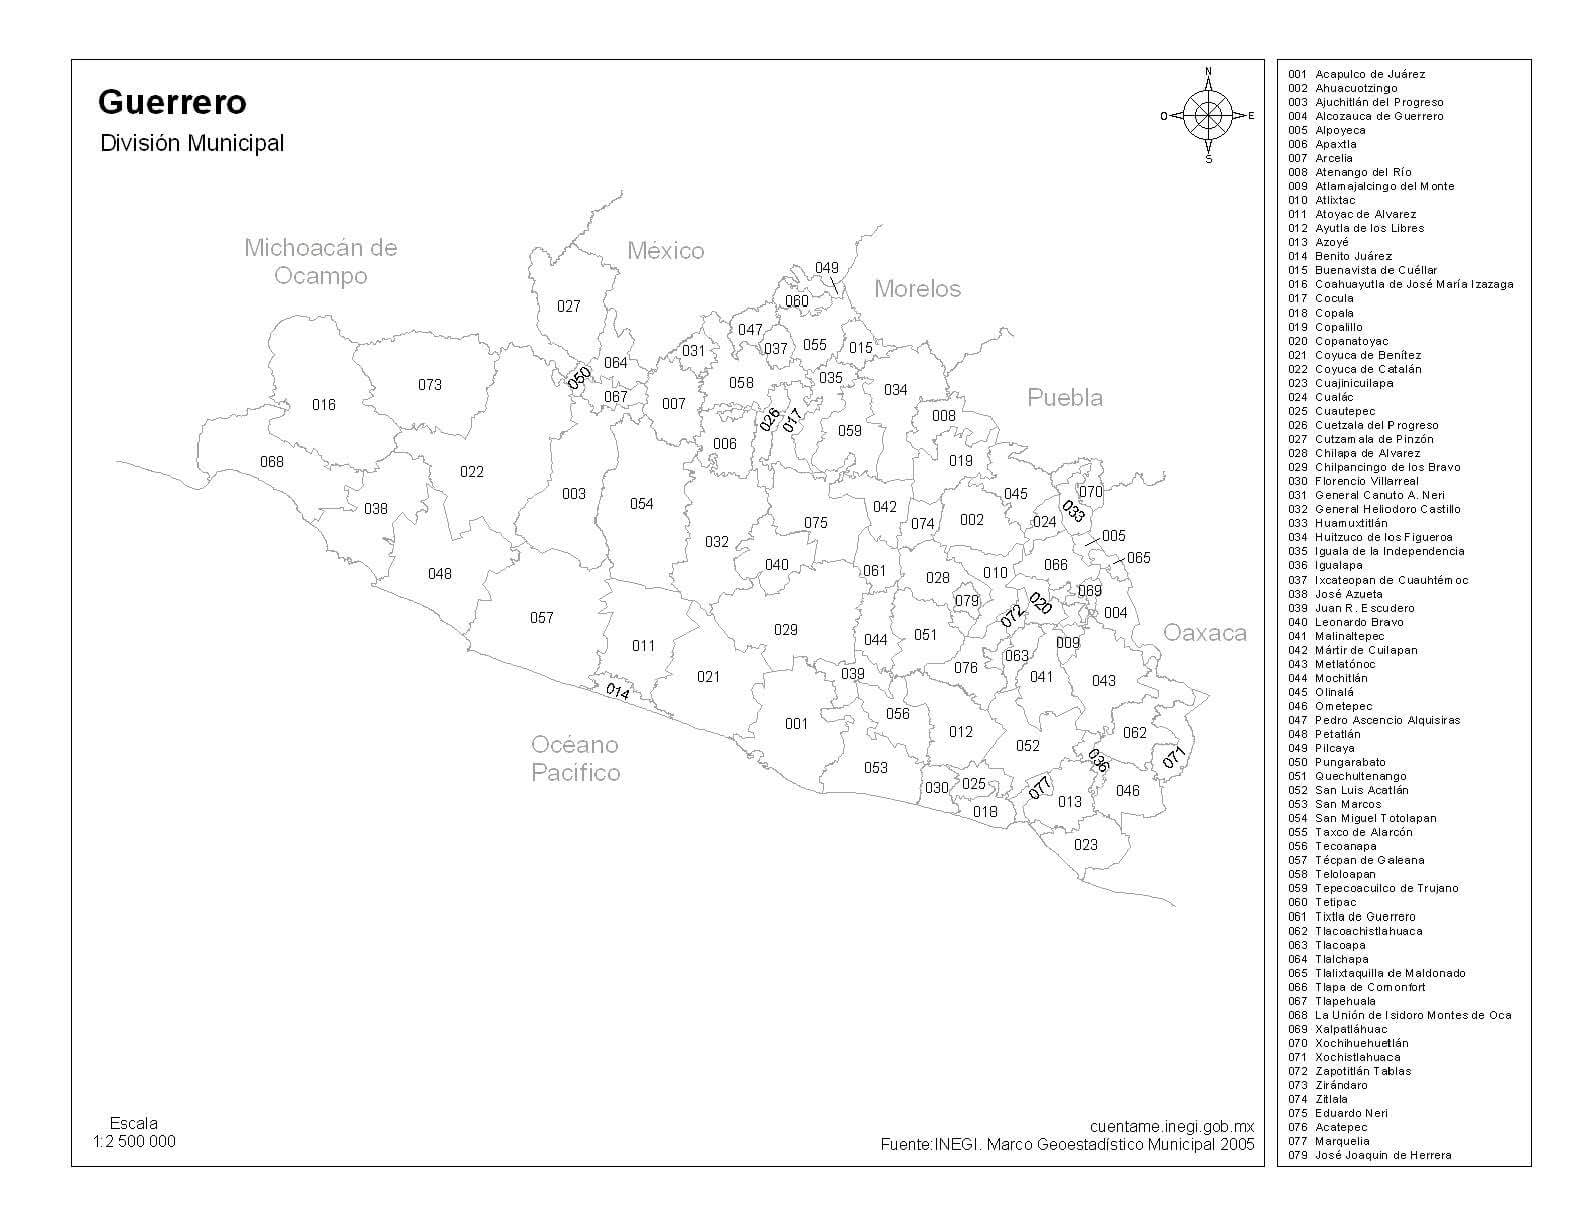 mapa de guerrero con division municipal 